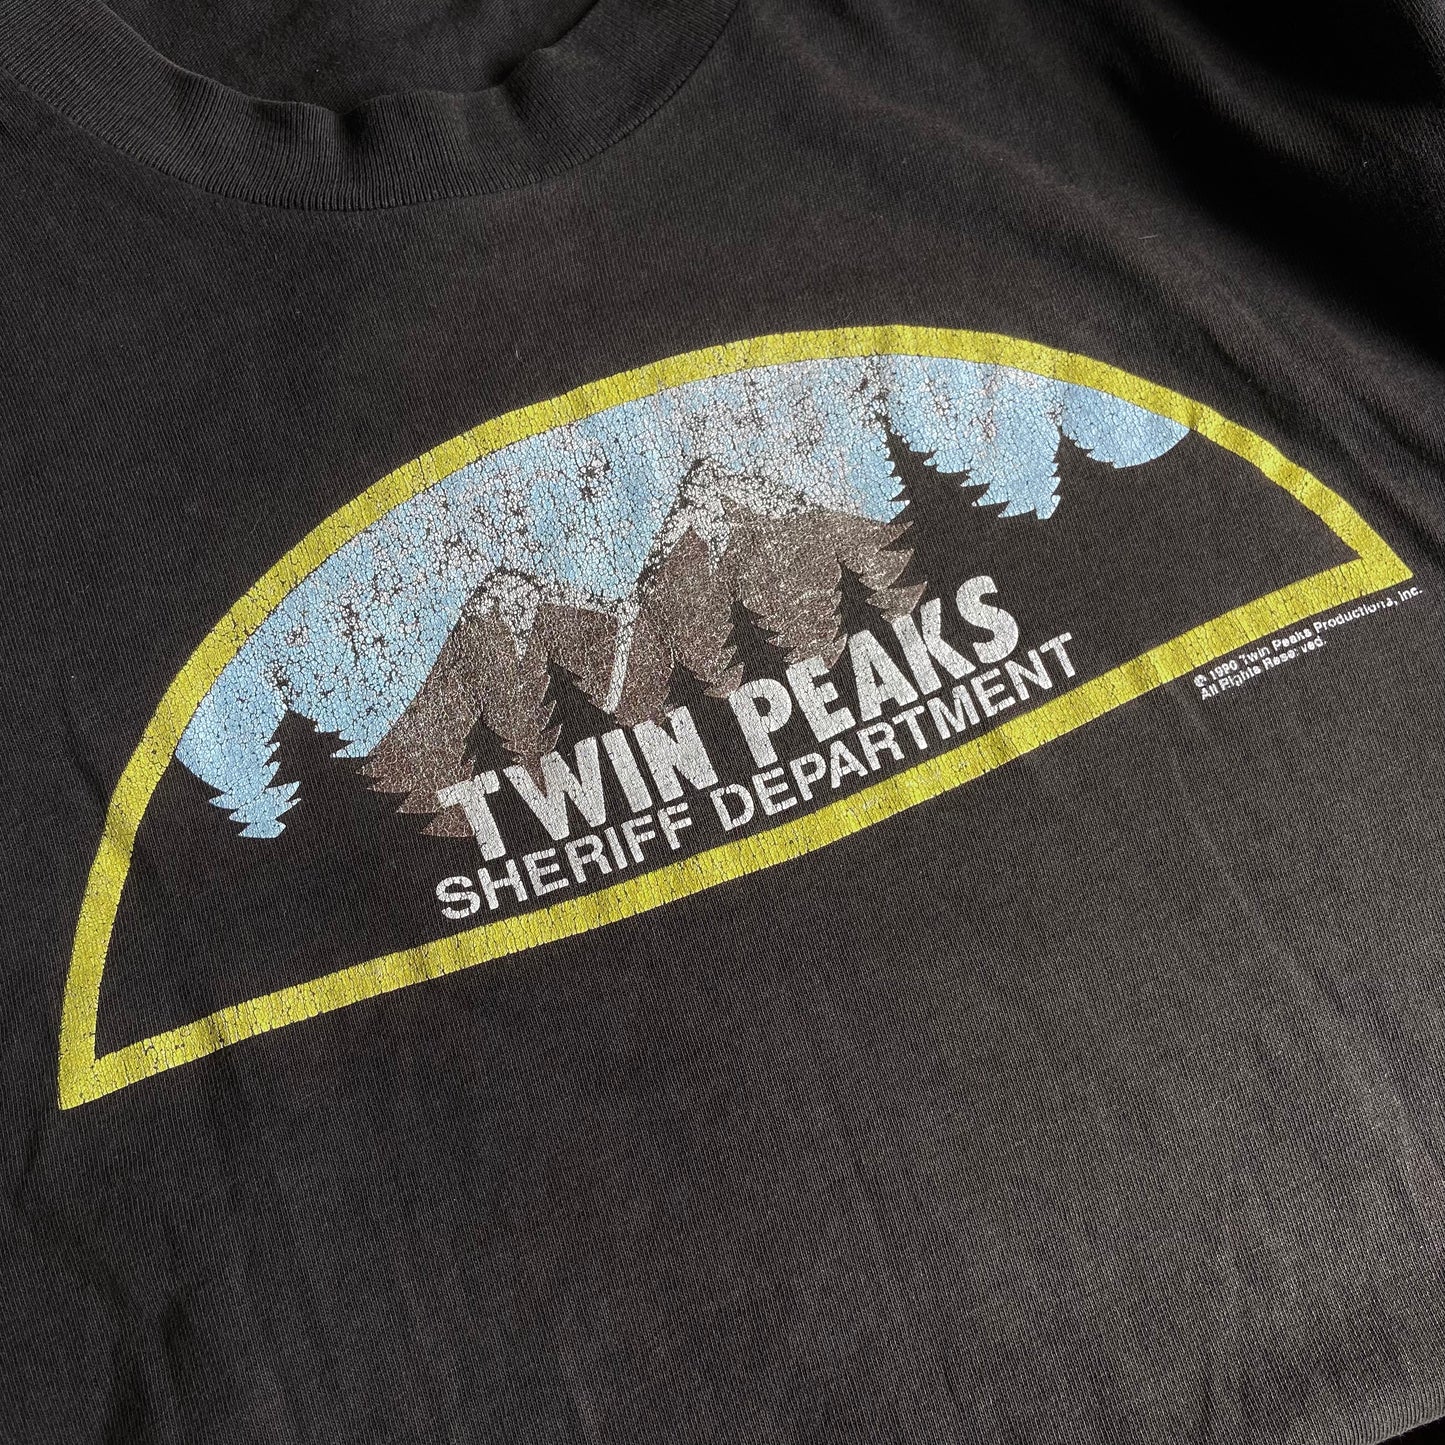 Vintage 1990s David Lynch Twin Peaks Tee